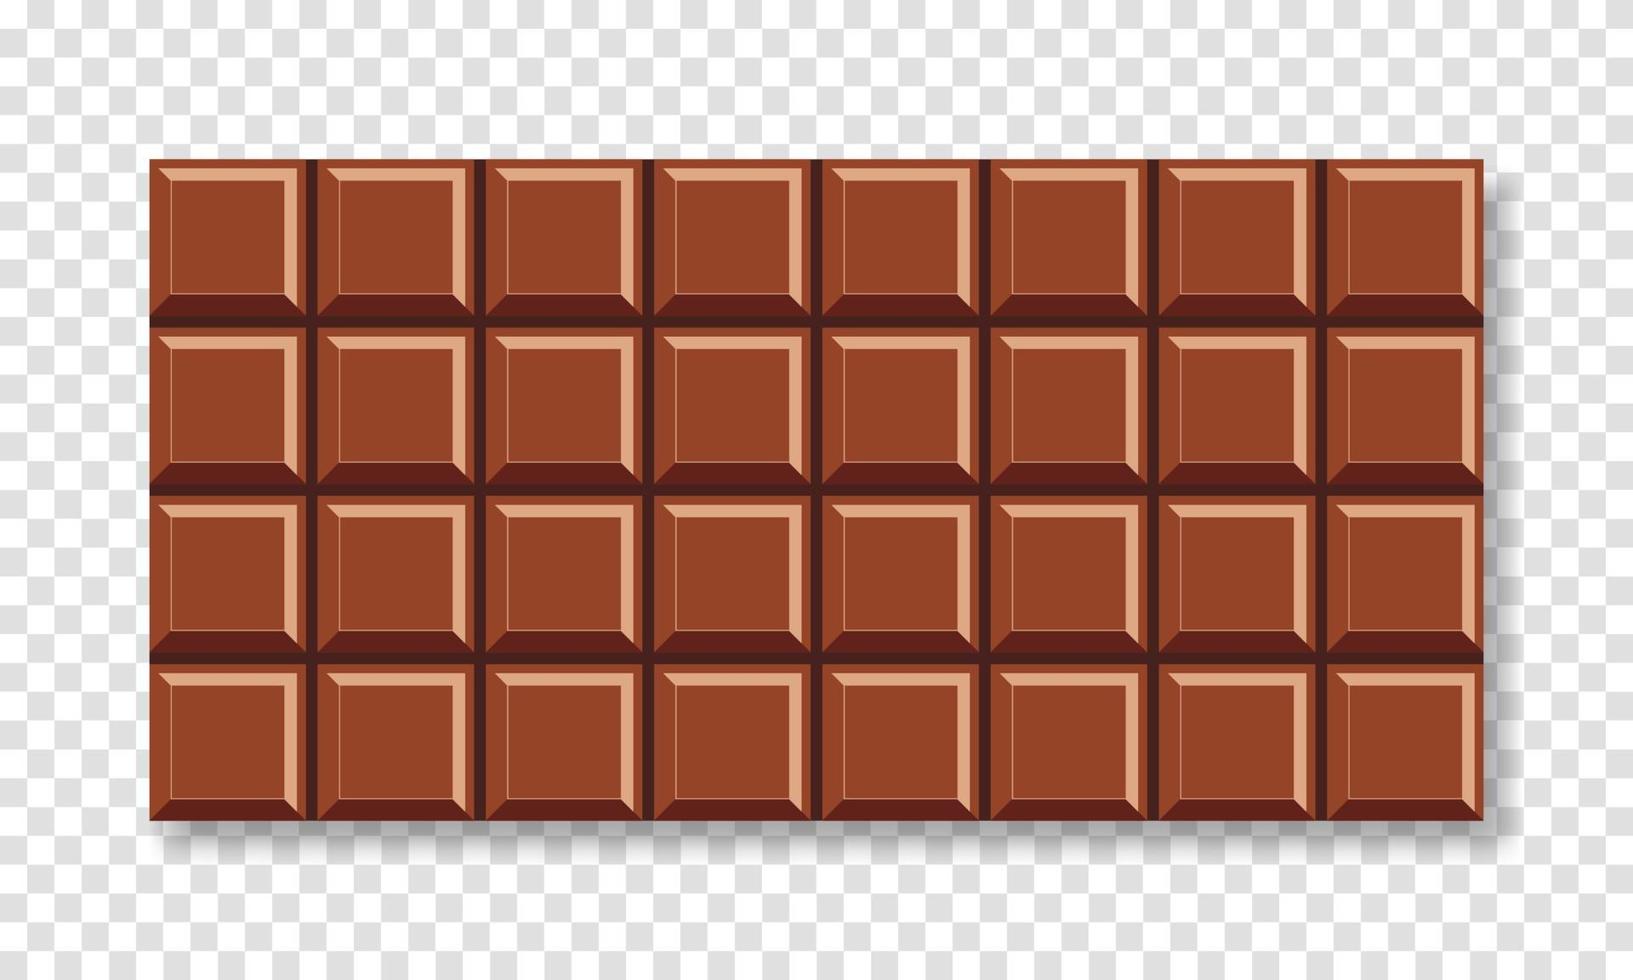 Milk chocolate bar isolated background. Vector illustration